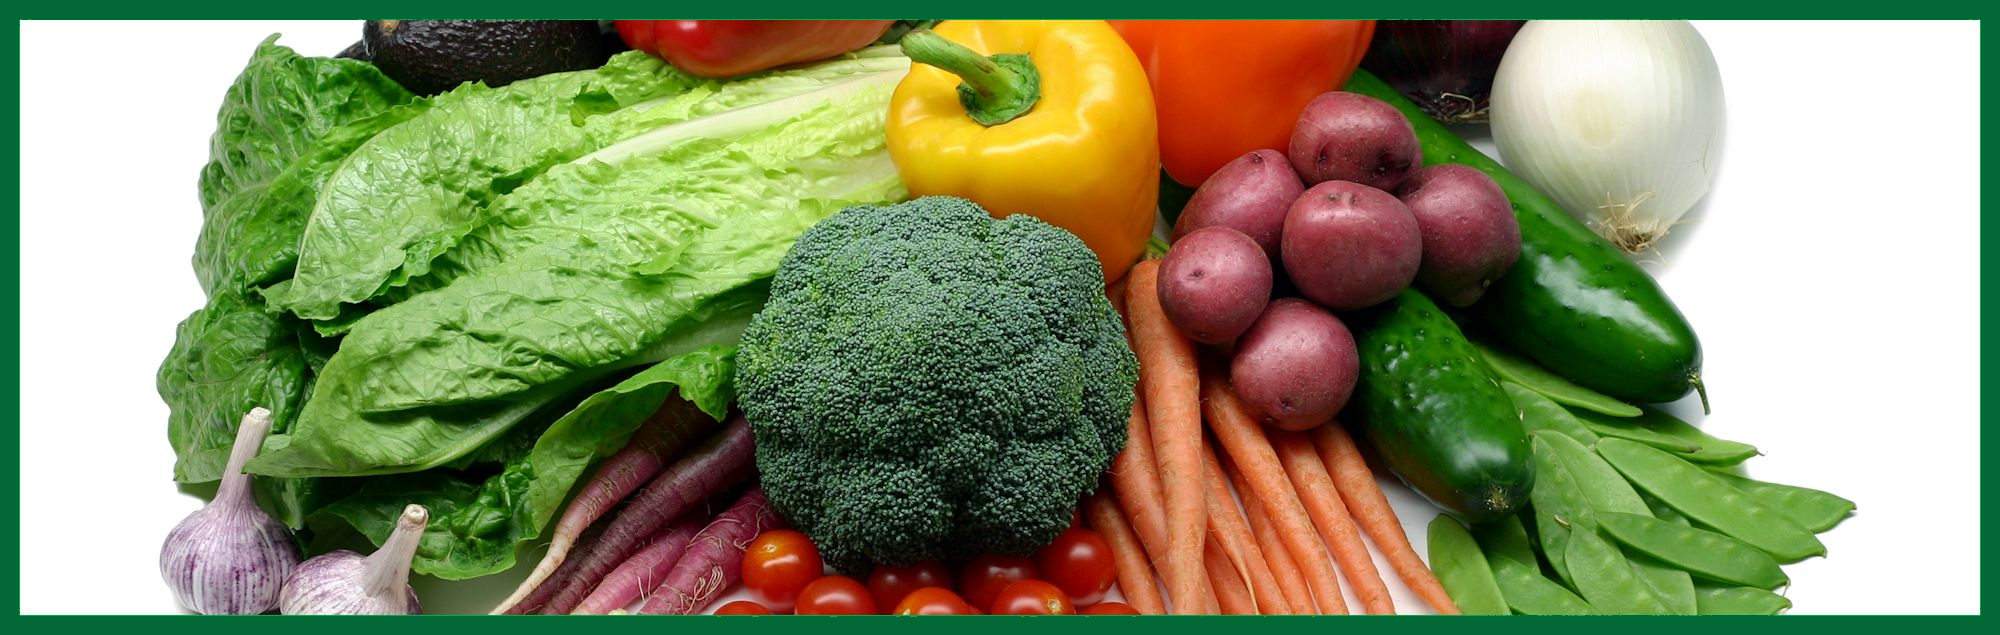 Vegetables Meal Component image